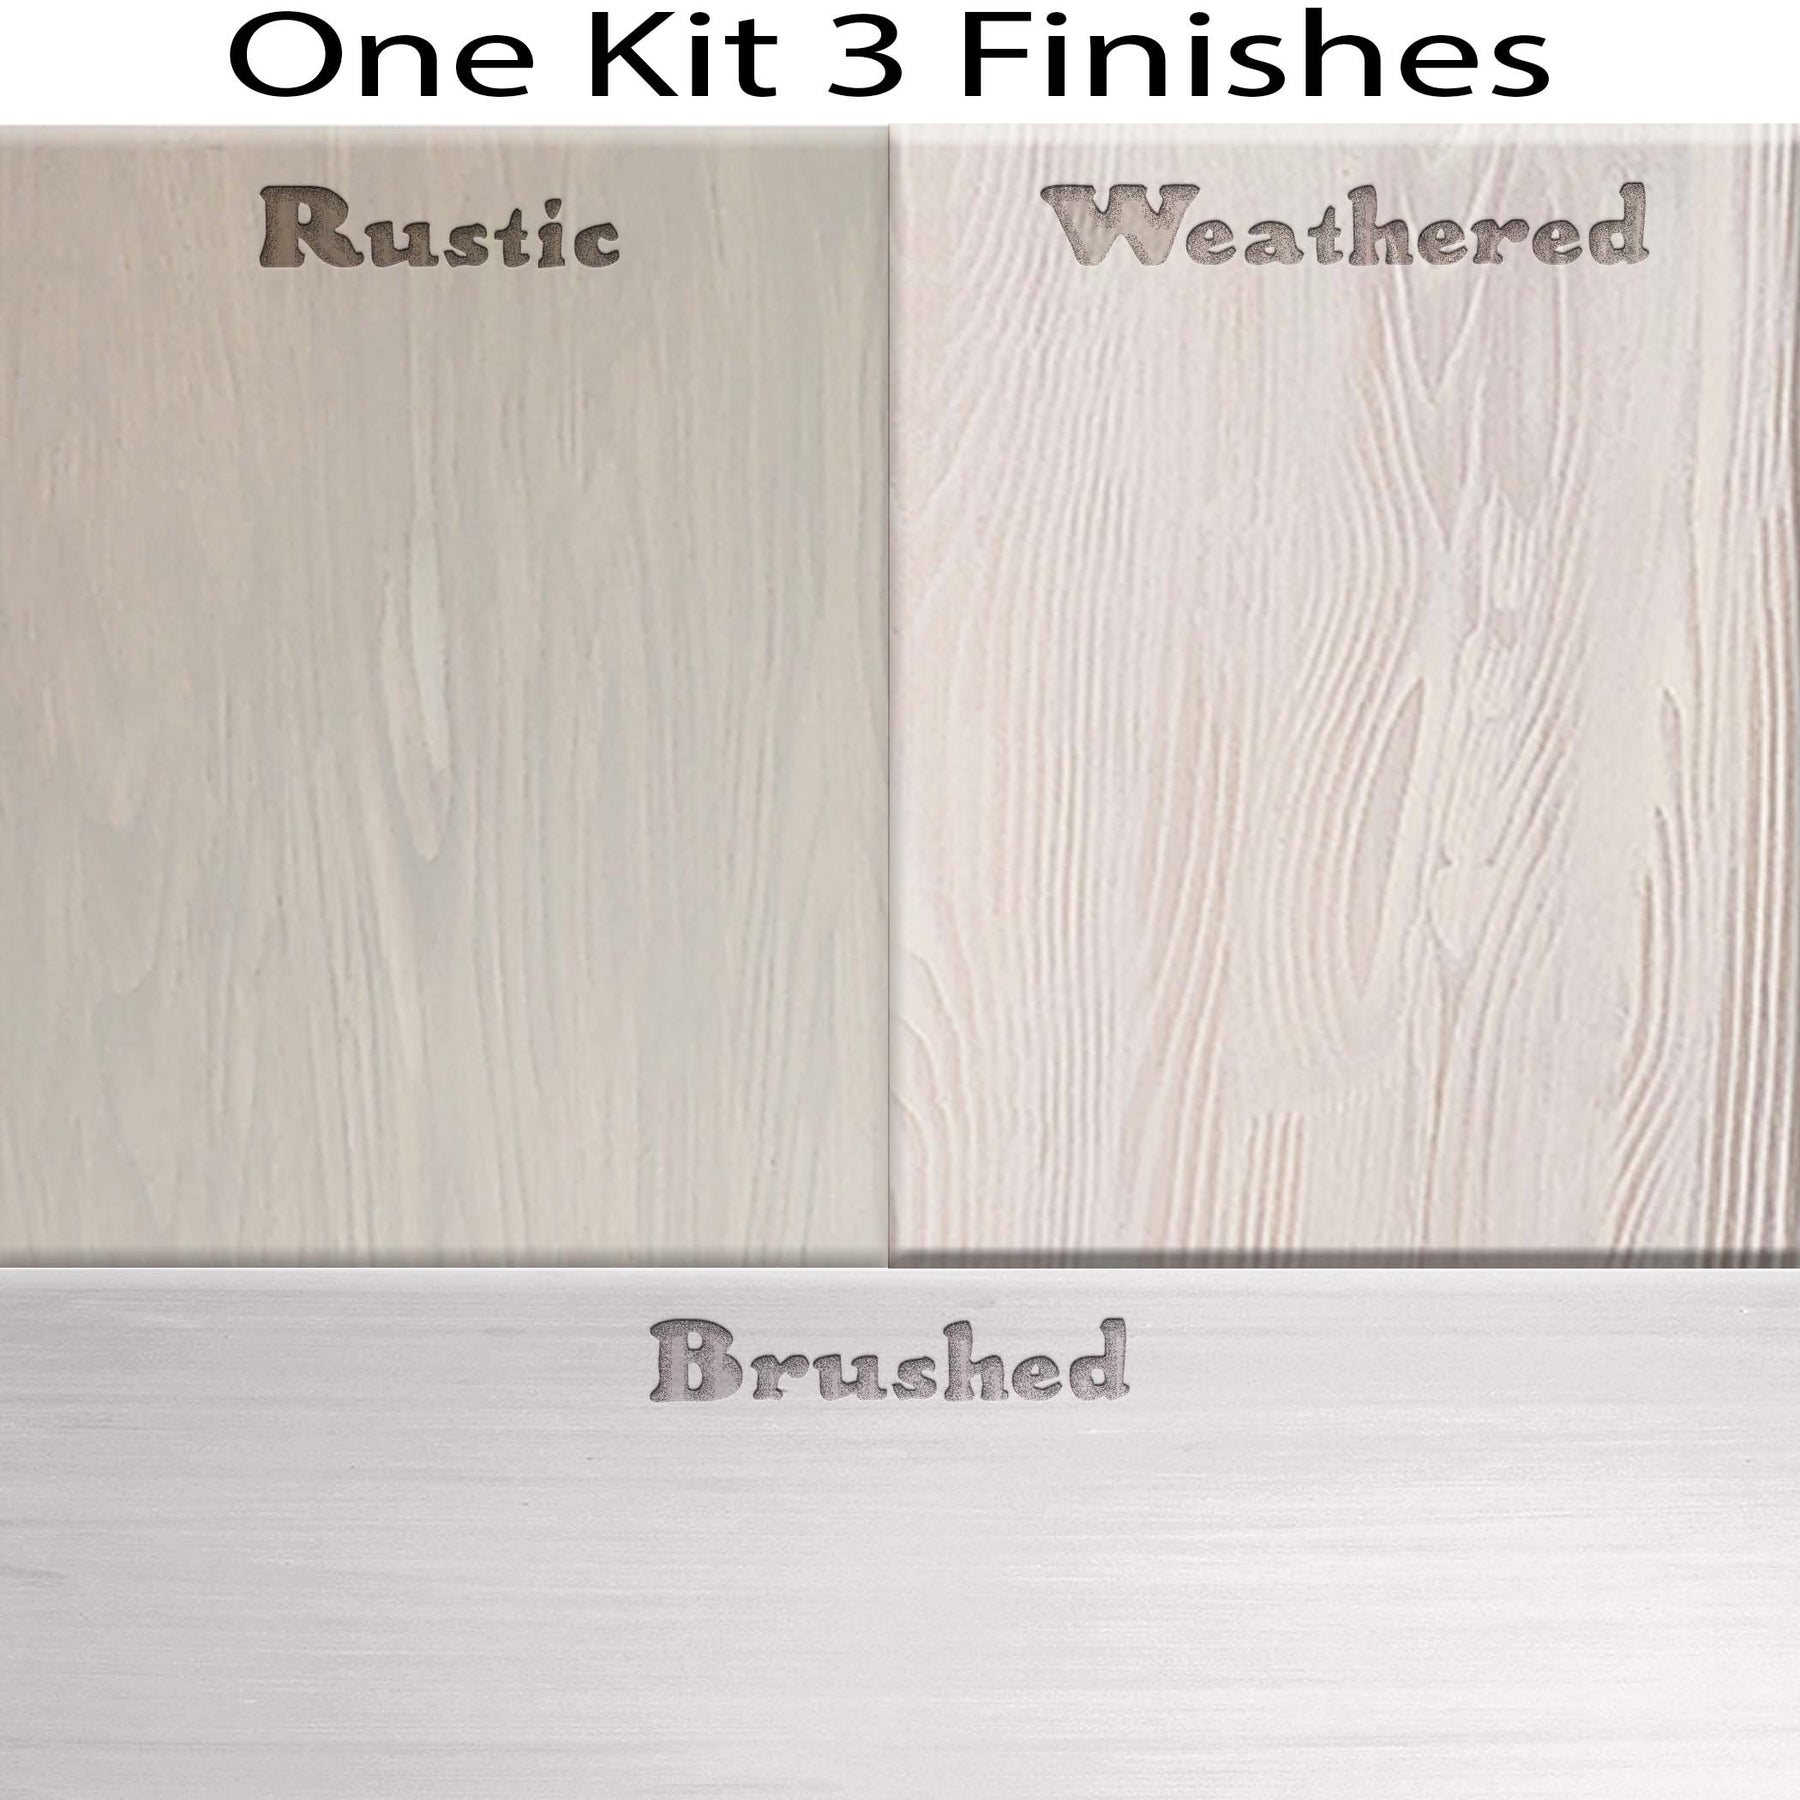 Wood'n Cabinet Kit (24 Door / Grained) - White Wash